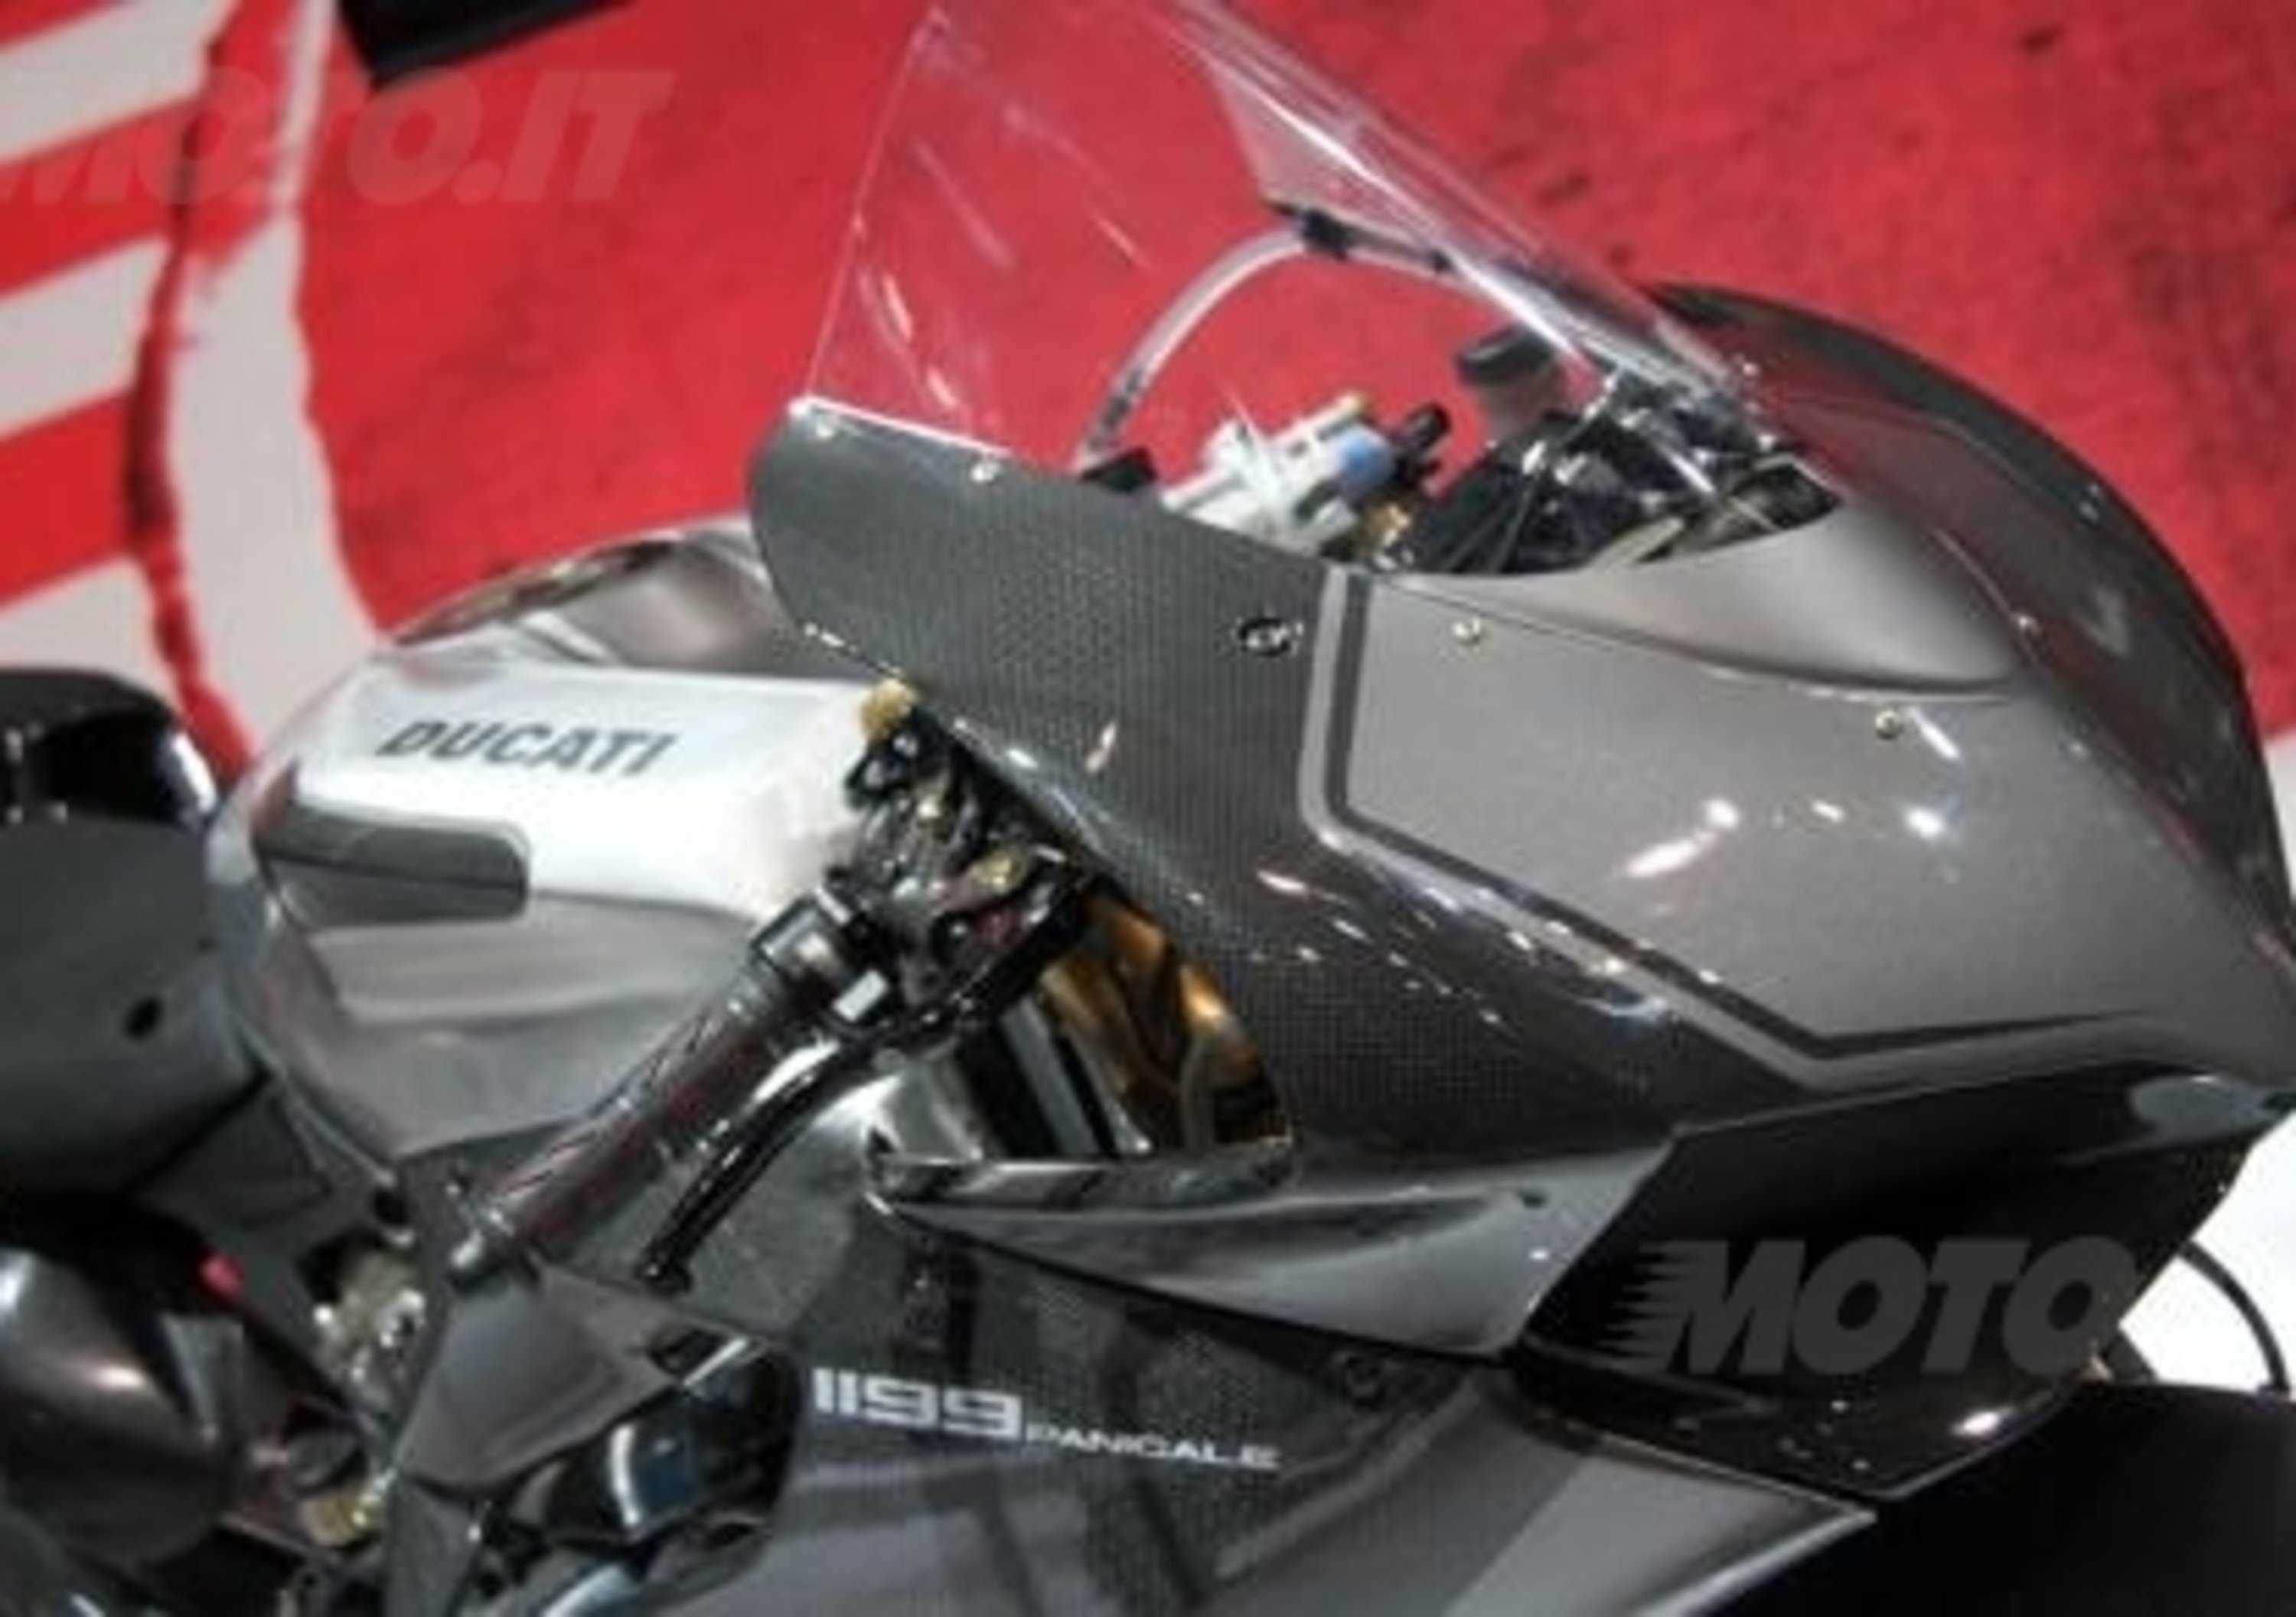 Intermot 2012: Ducati Panigale Superbike